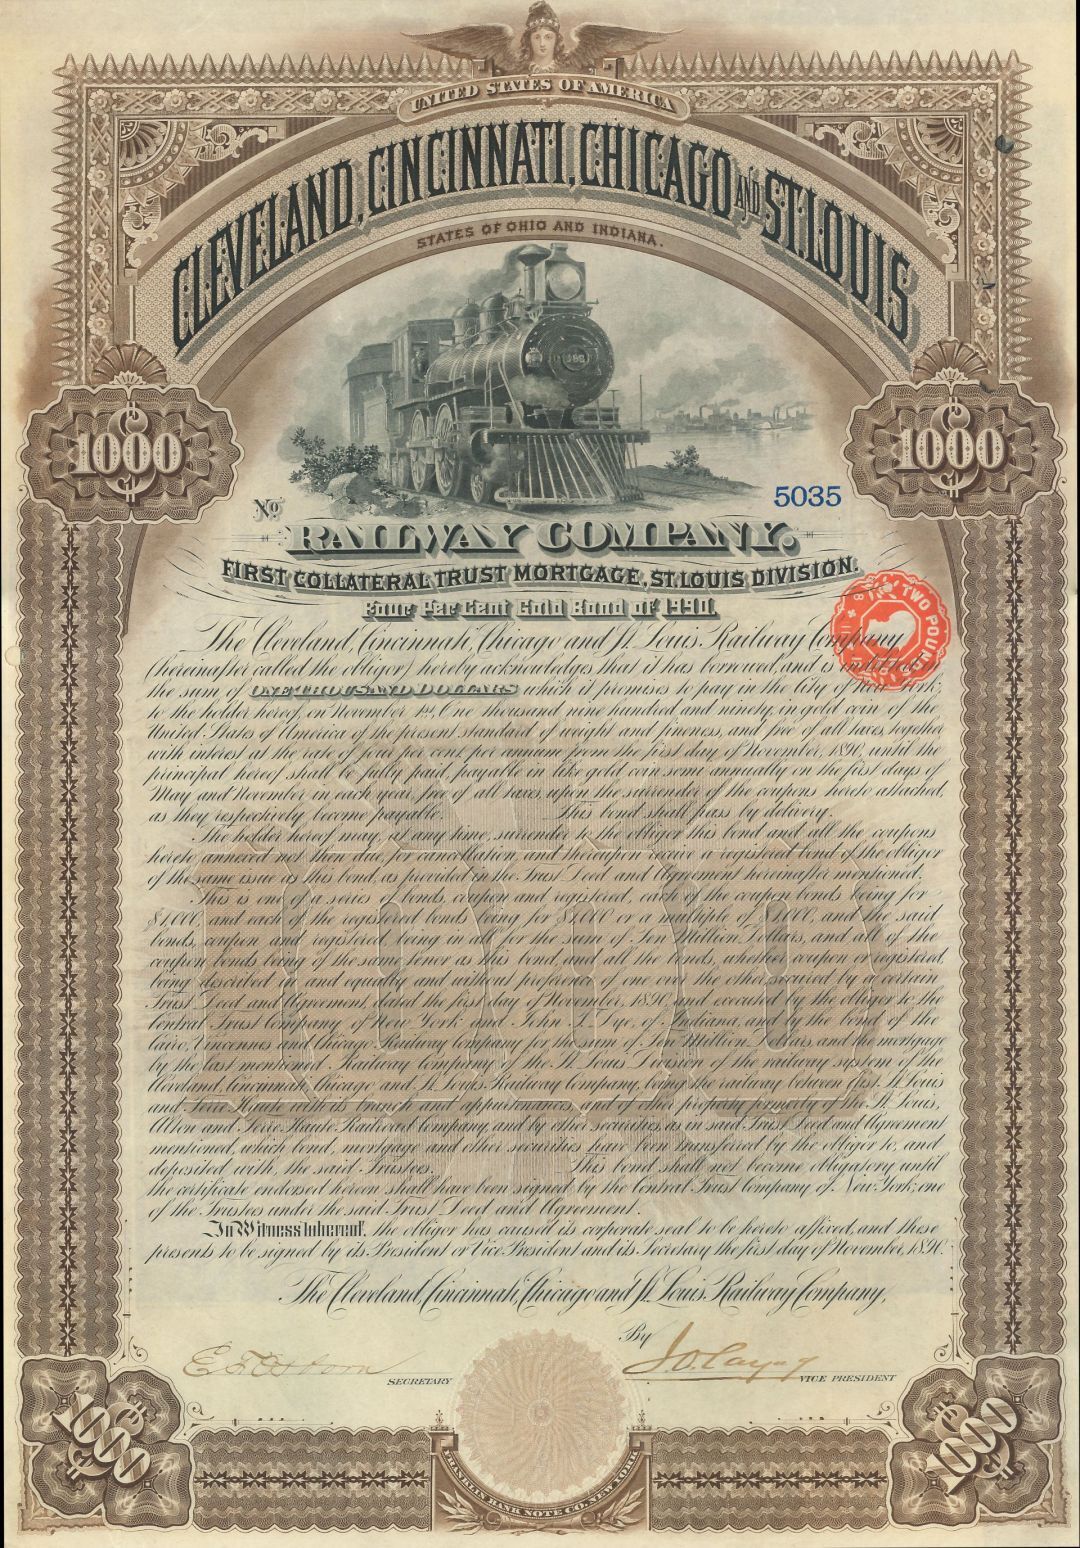 Cleveland, Cincinnati, Chicago and St. Louis Railway - $1,000 Railroad Gold Bond